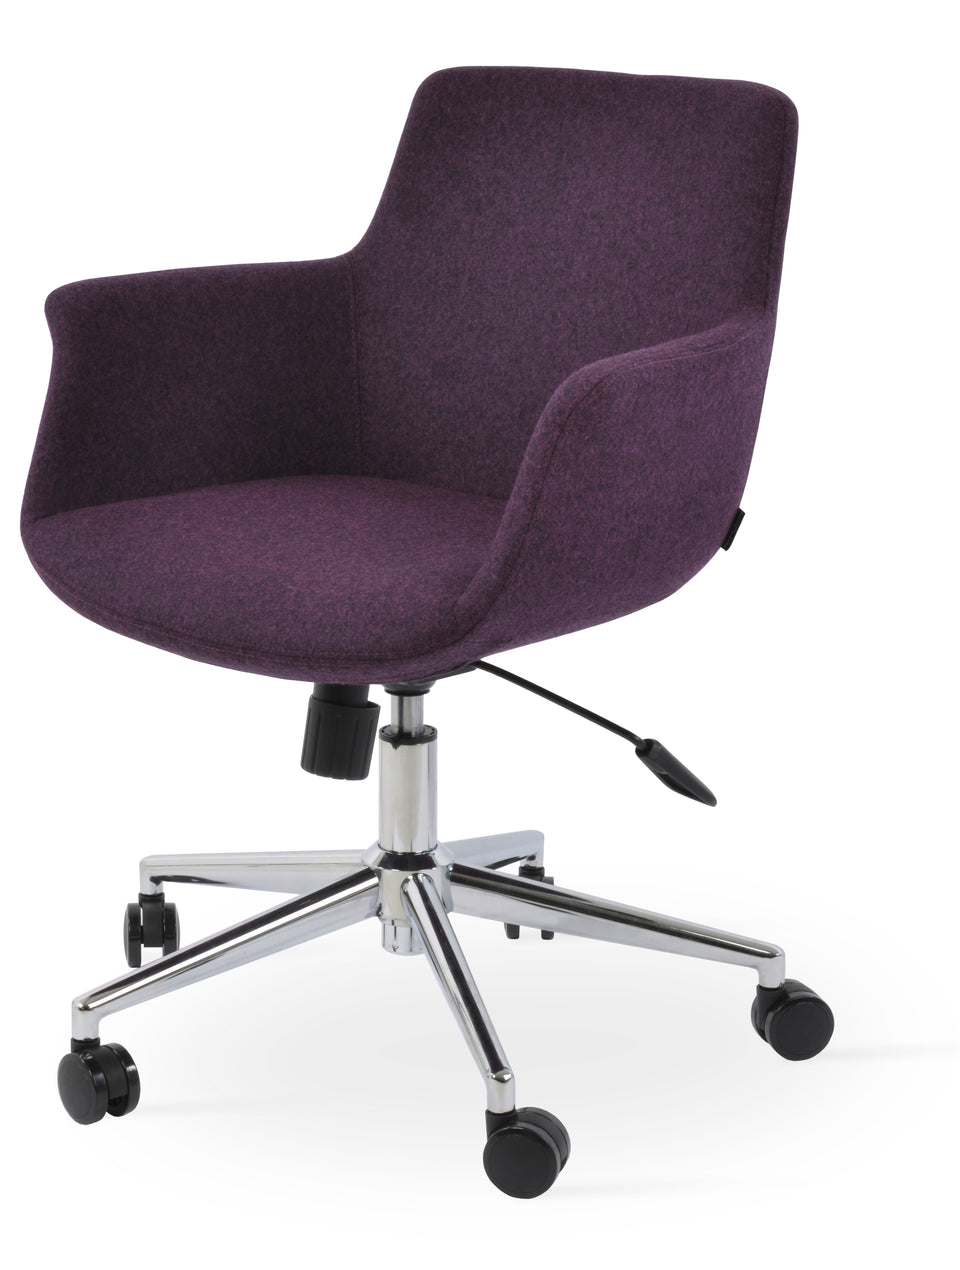 Bottega Arm Office Chair.